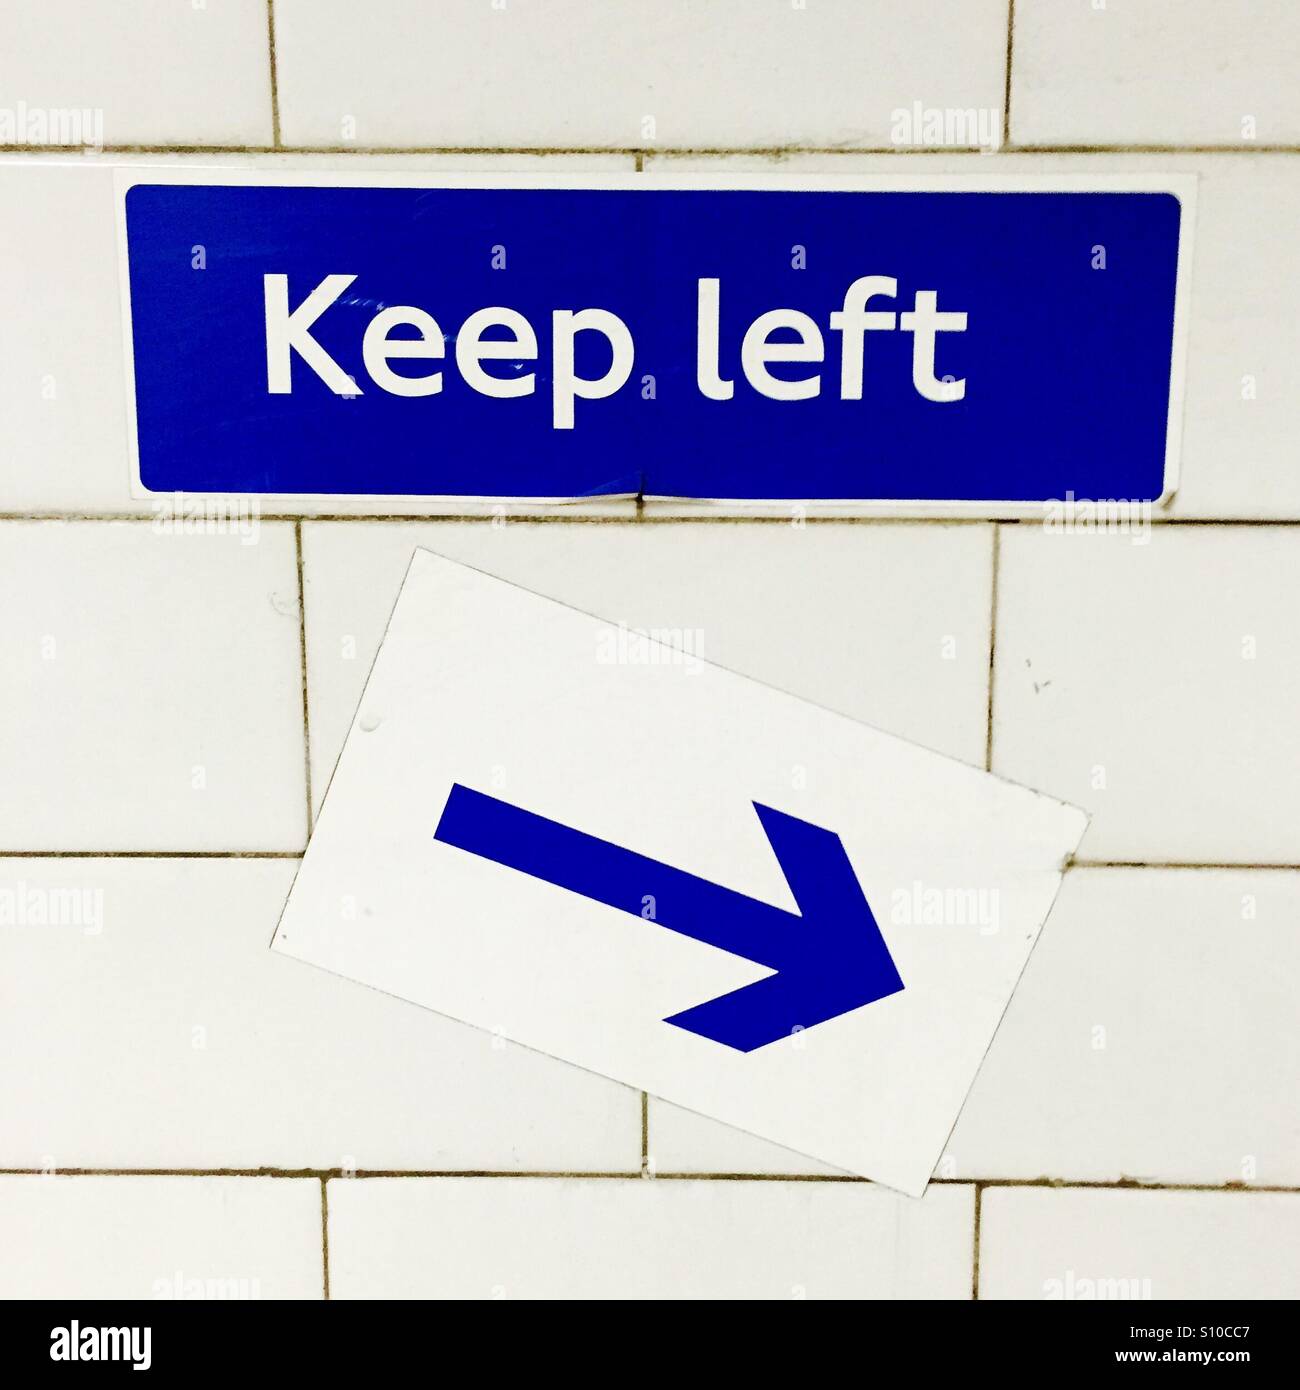 Keep left Stock Photo